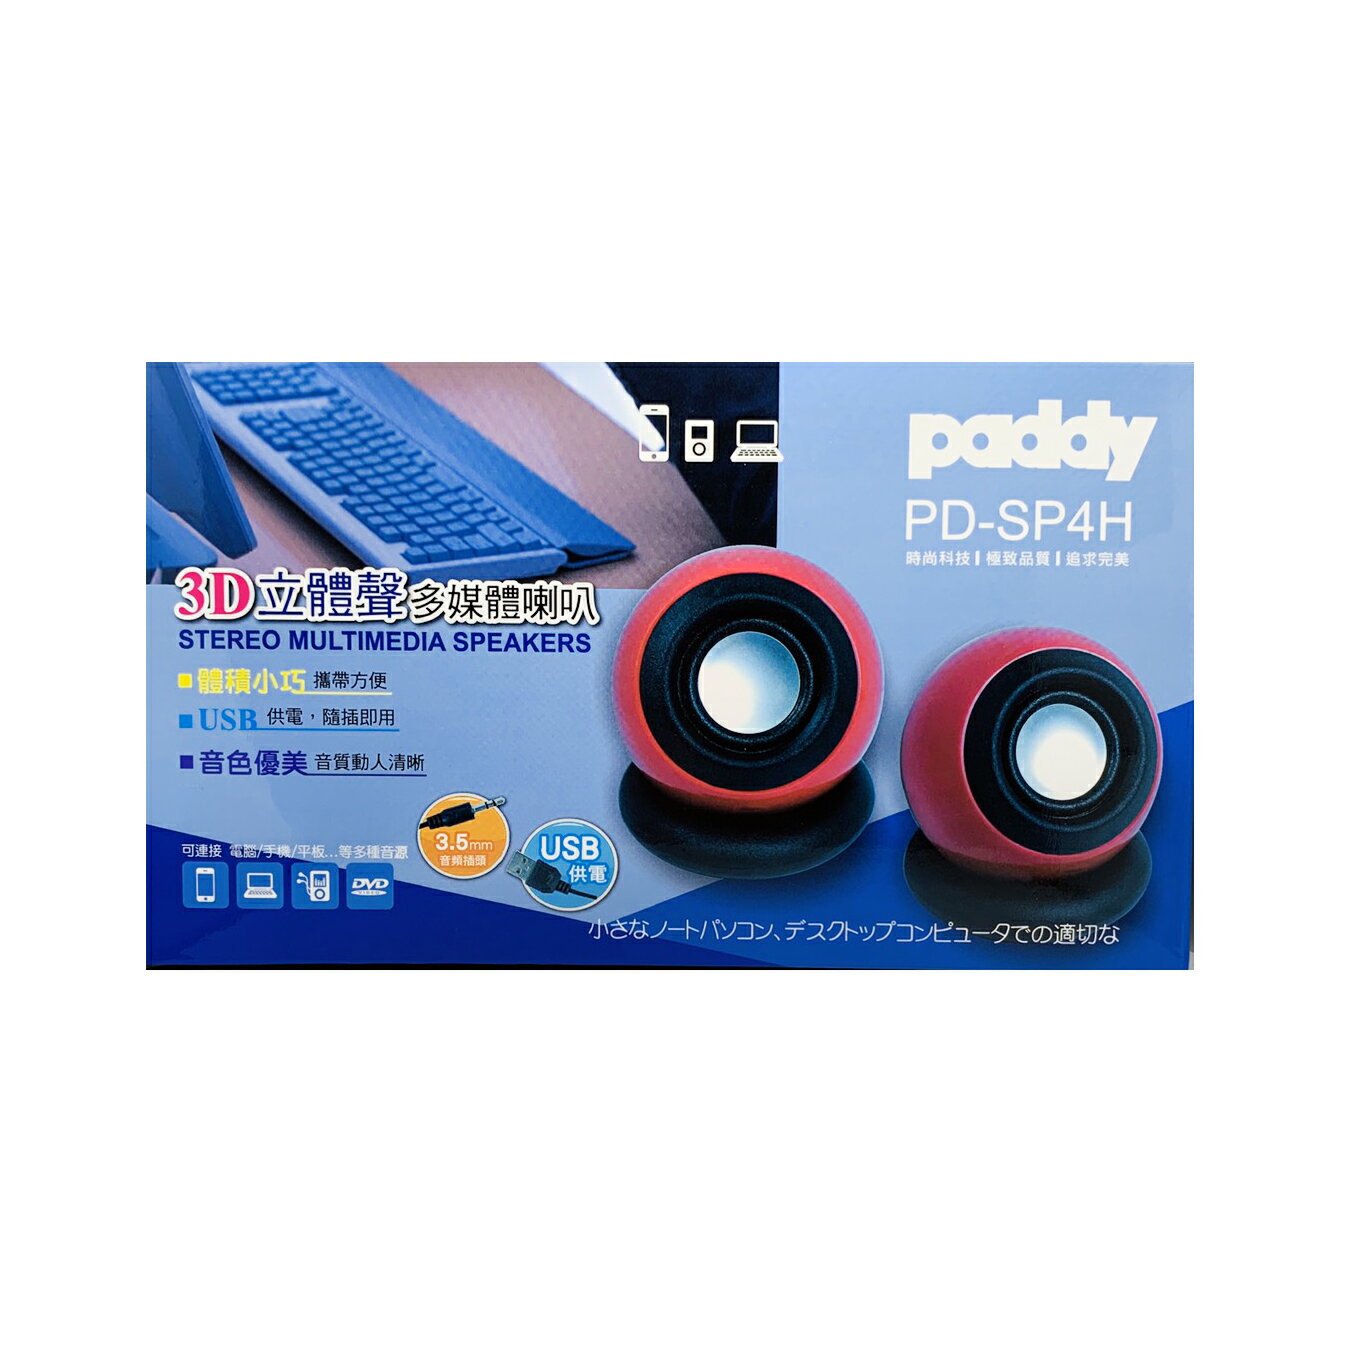 paddy 台菱 PD-SP4H 球型線控 3D立體聲多媒體喇叭 紅色 USB供電 音色優美清晰 音箱 音響